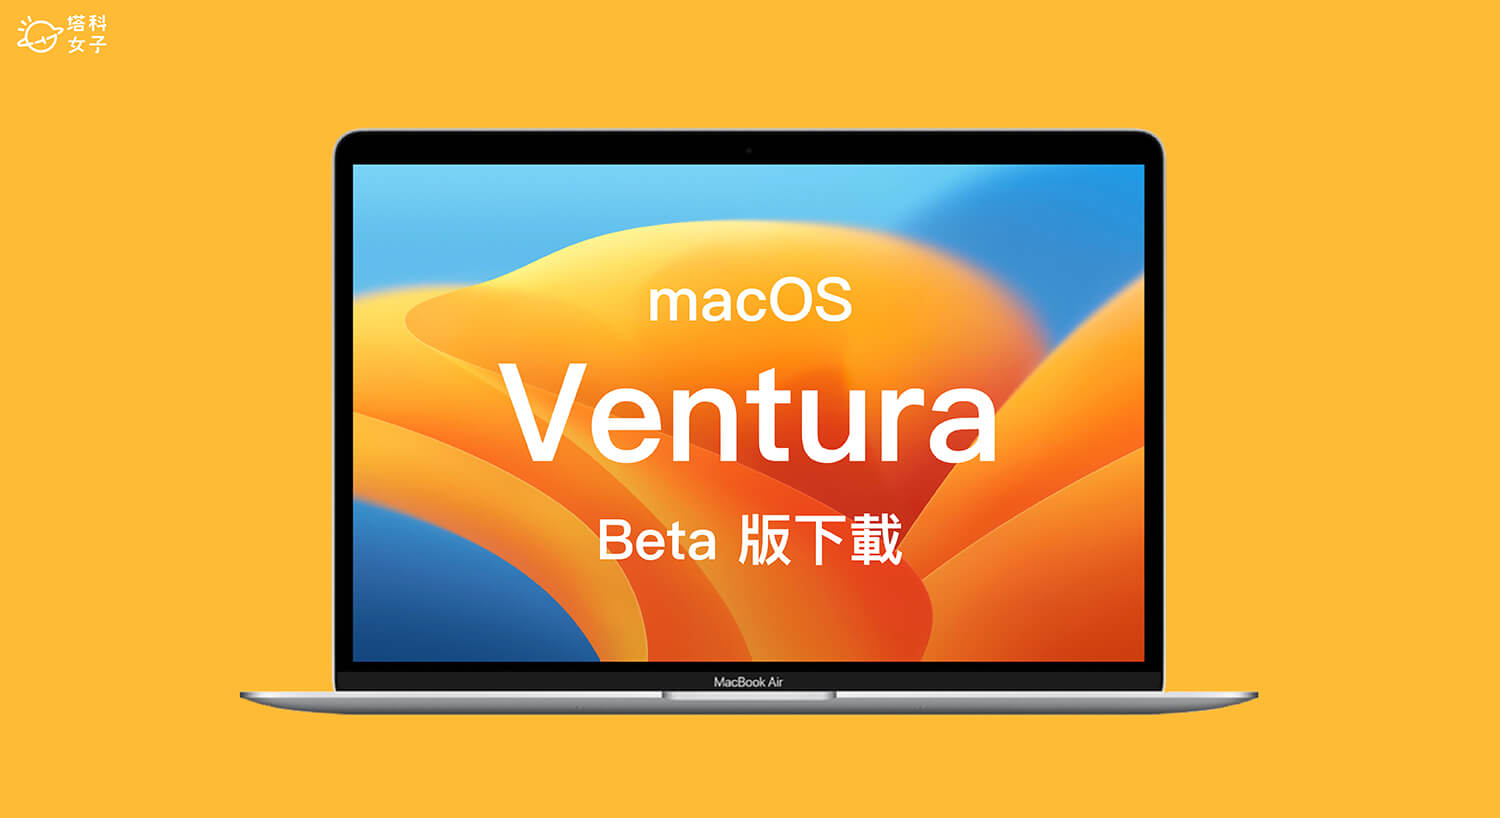 macOS Ventura Beta 下載教學，搶先體驗 macOS 13 測試版